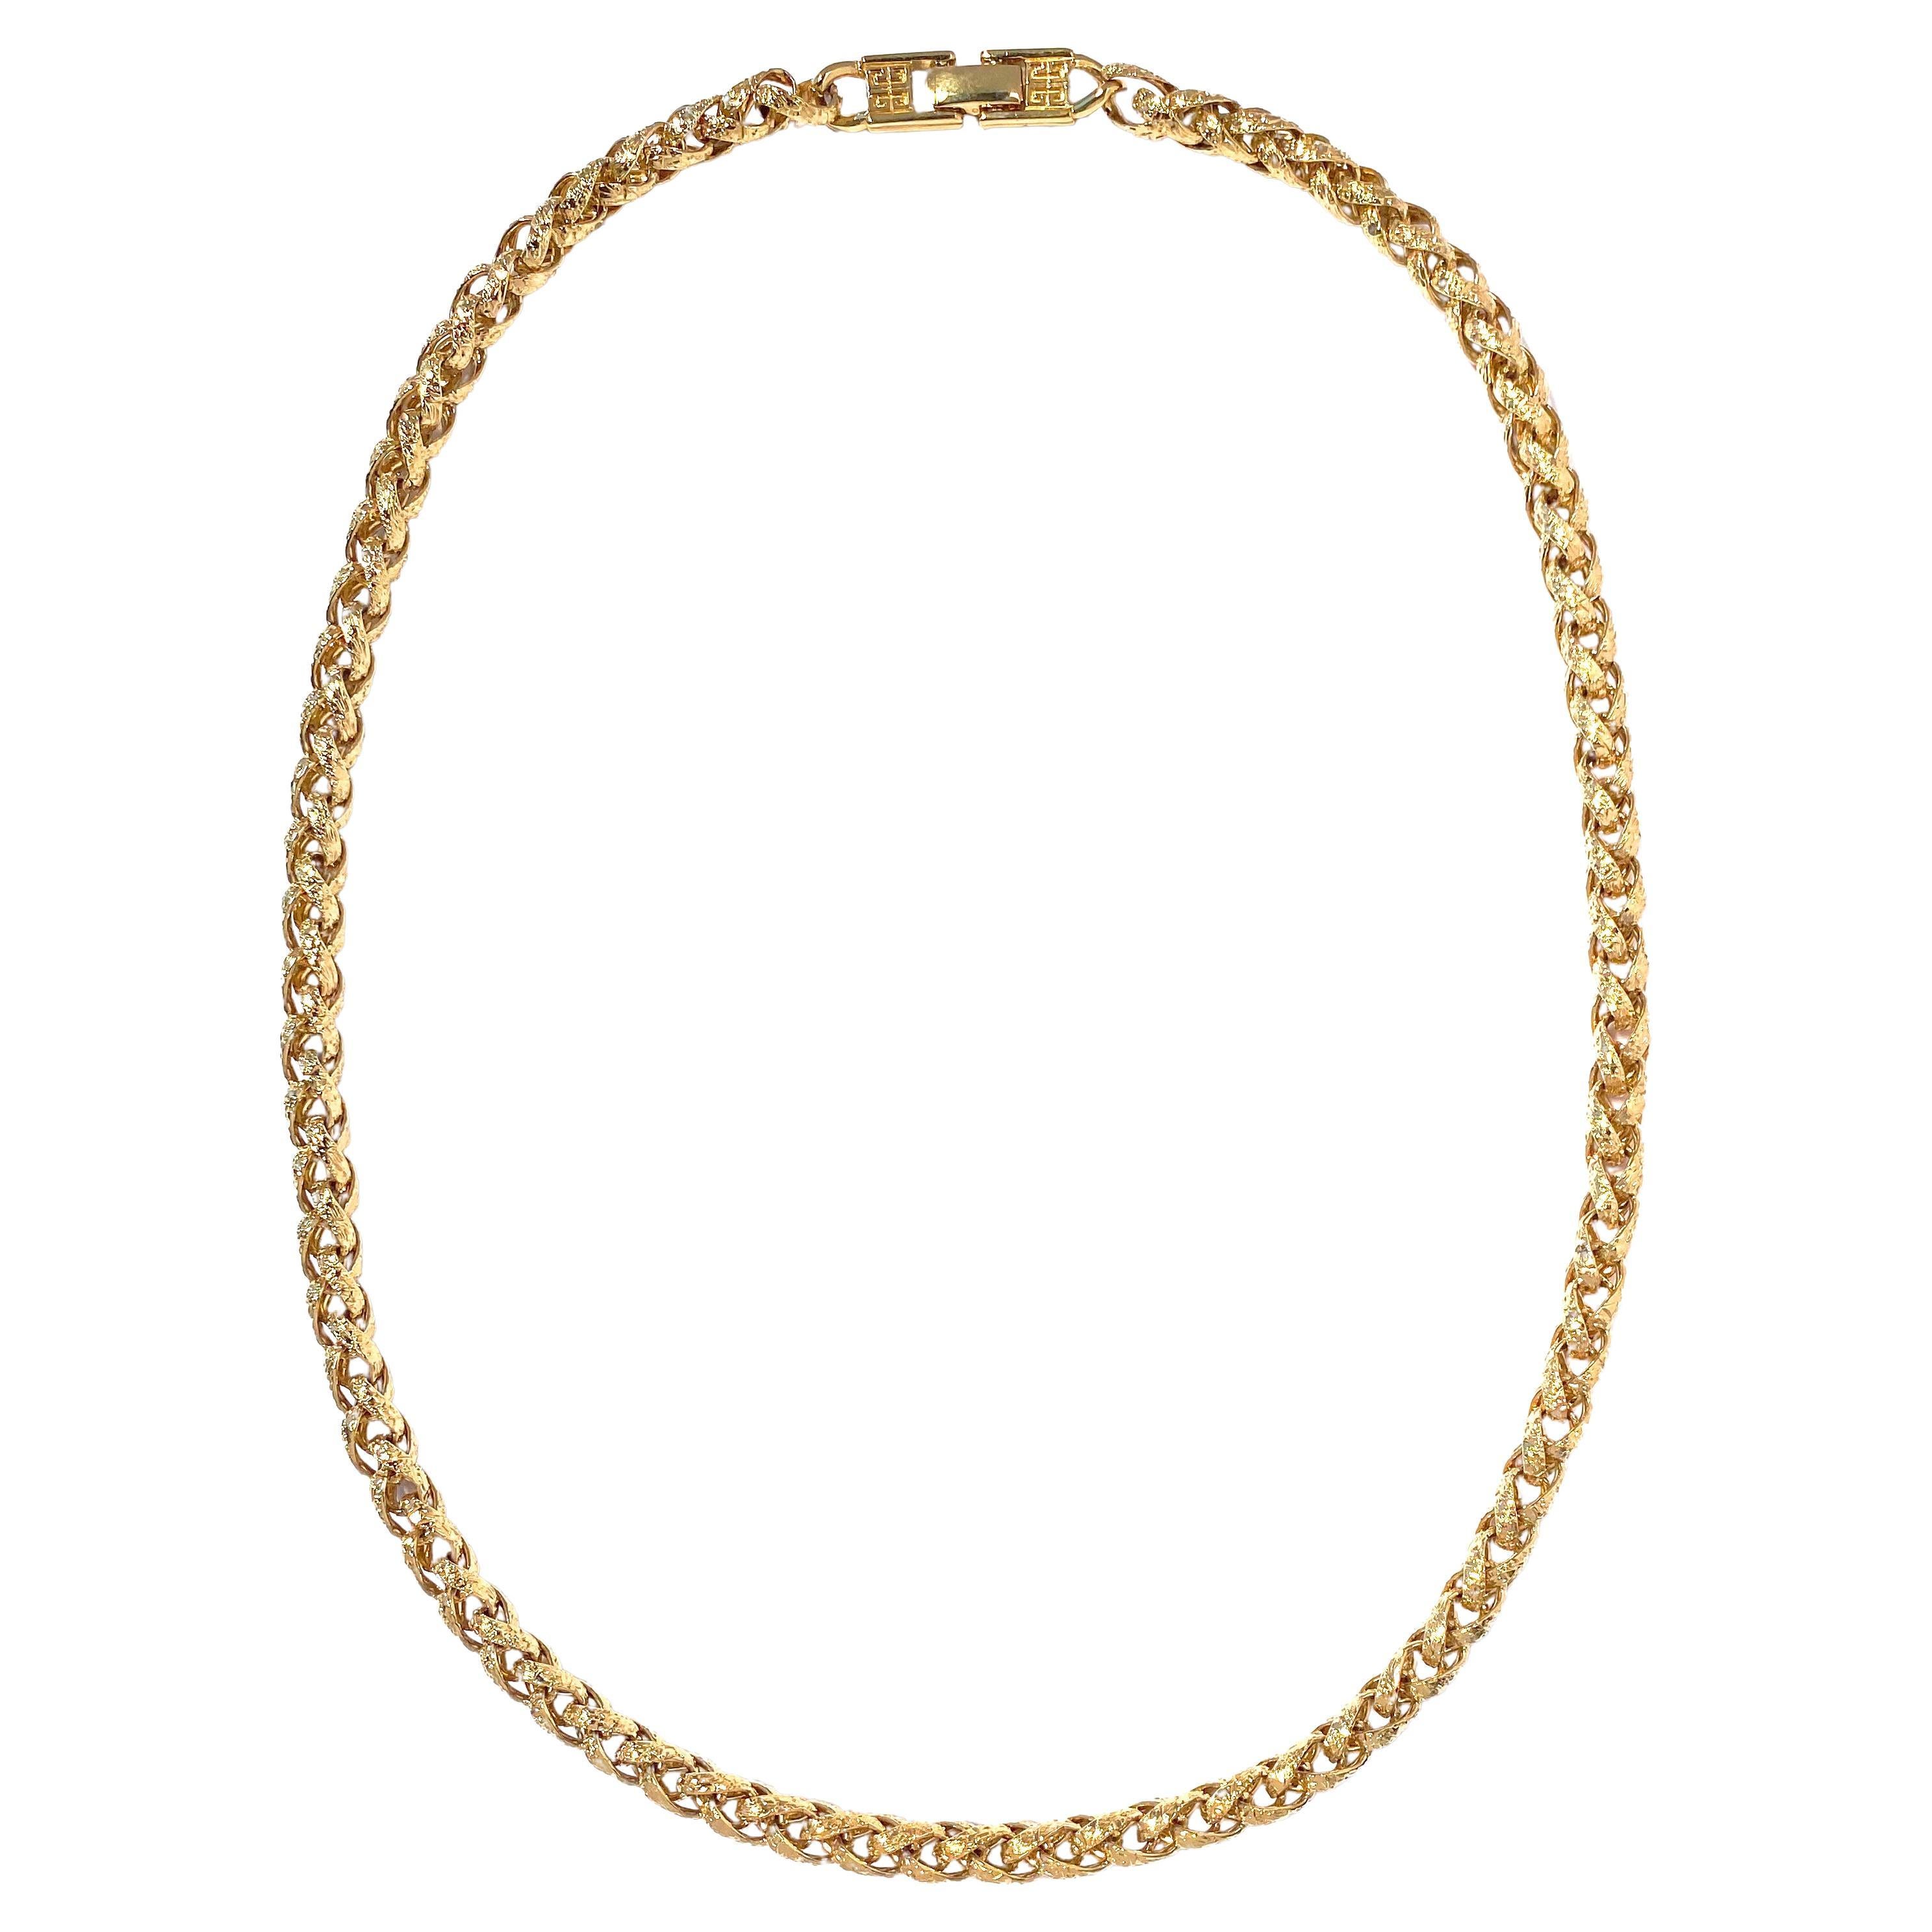 Vintage Givenchy Byzantine Chain Necklace, 1980s